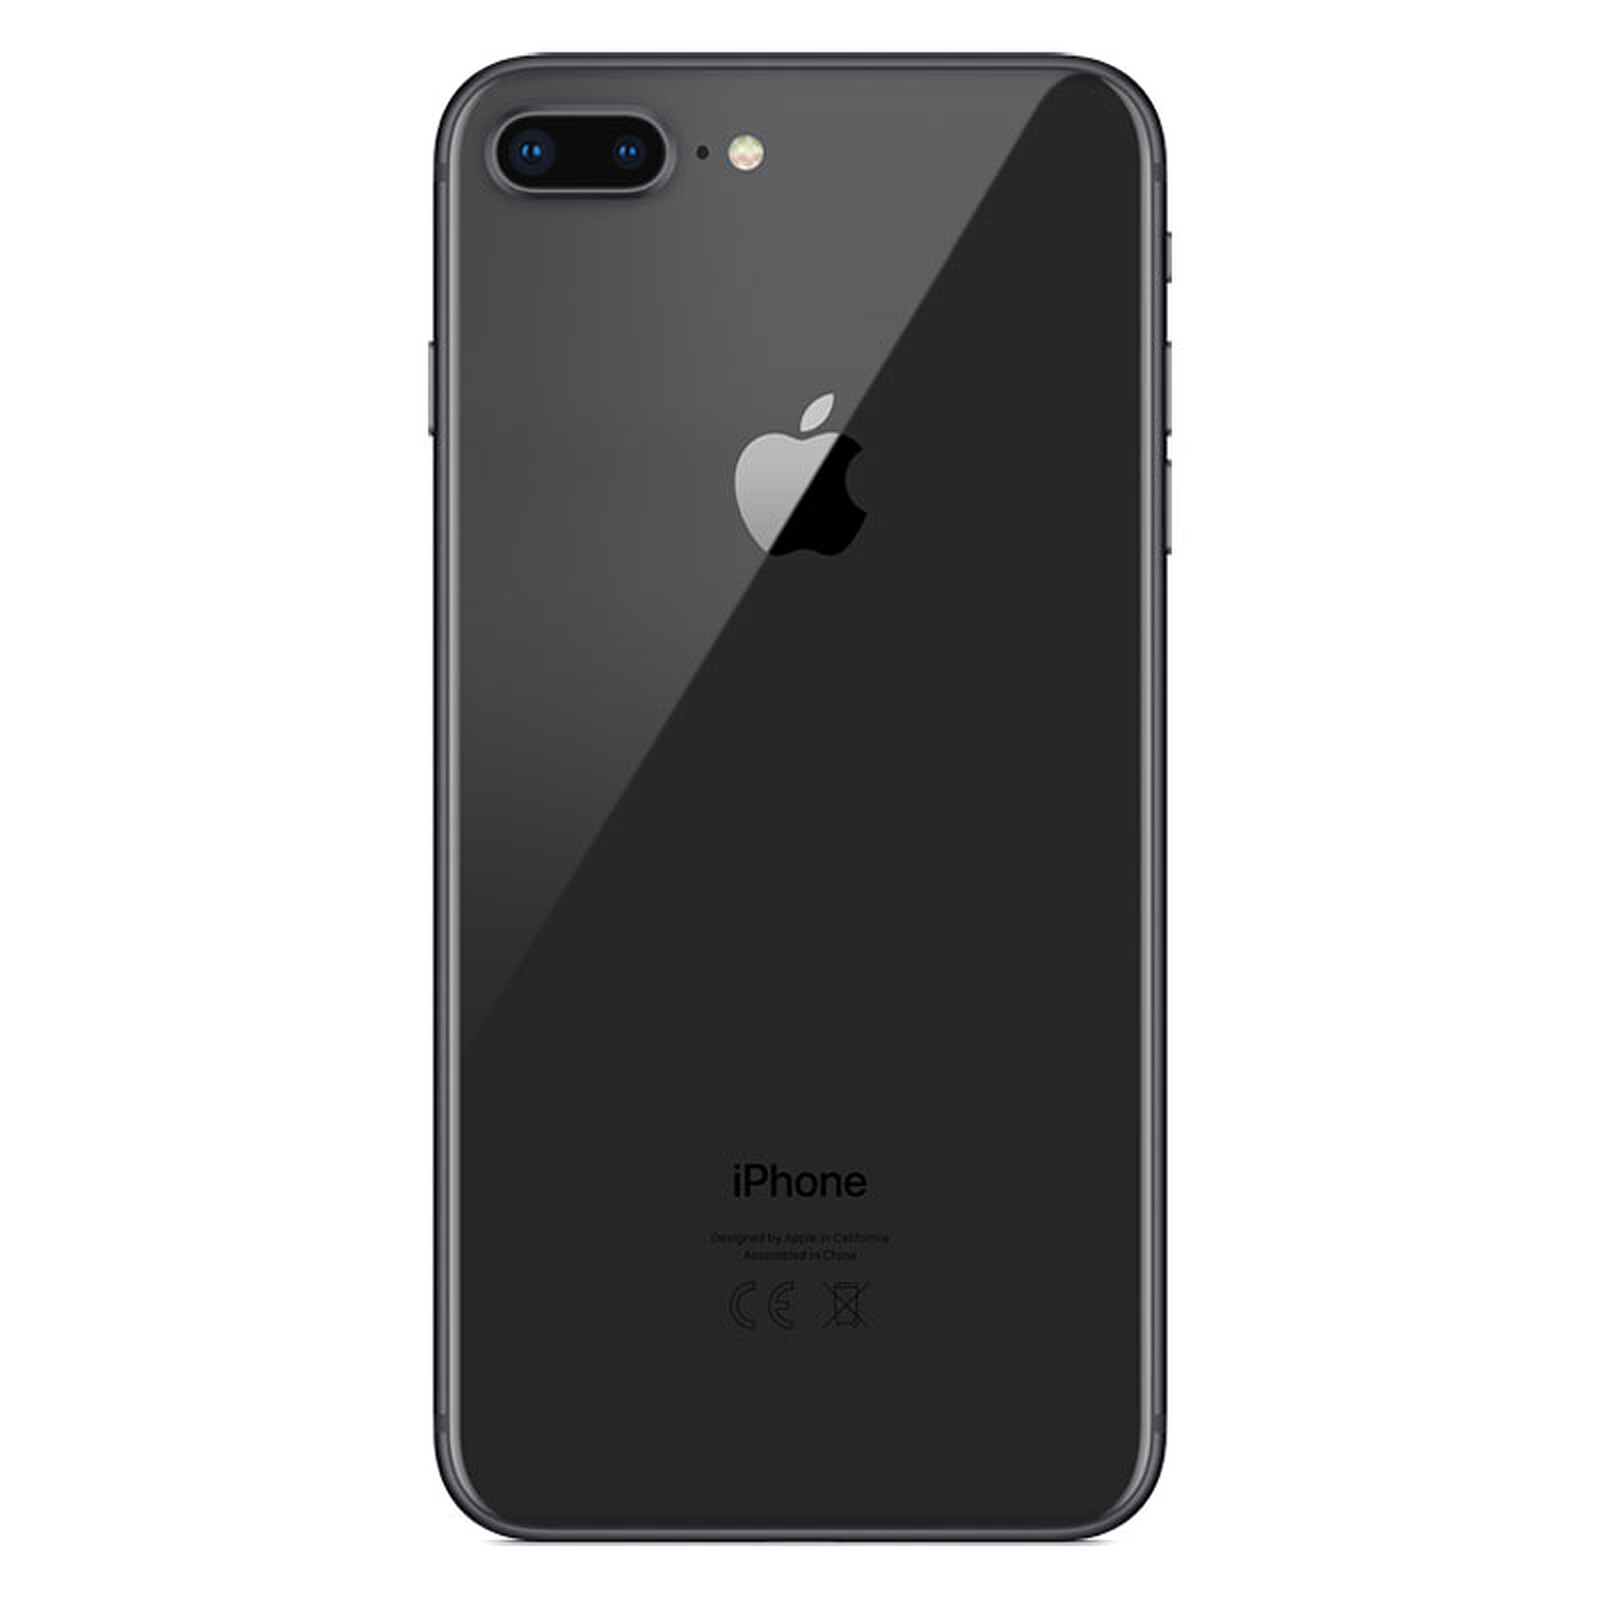 Apple iPhone 8 - Ficha Técnica 